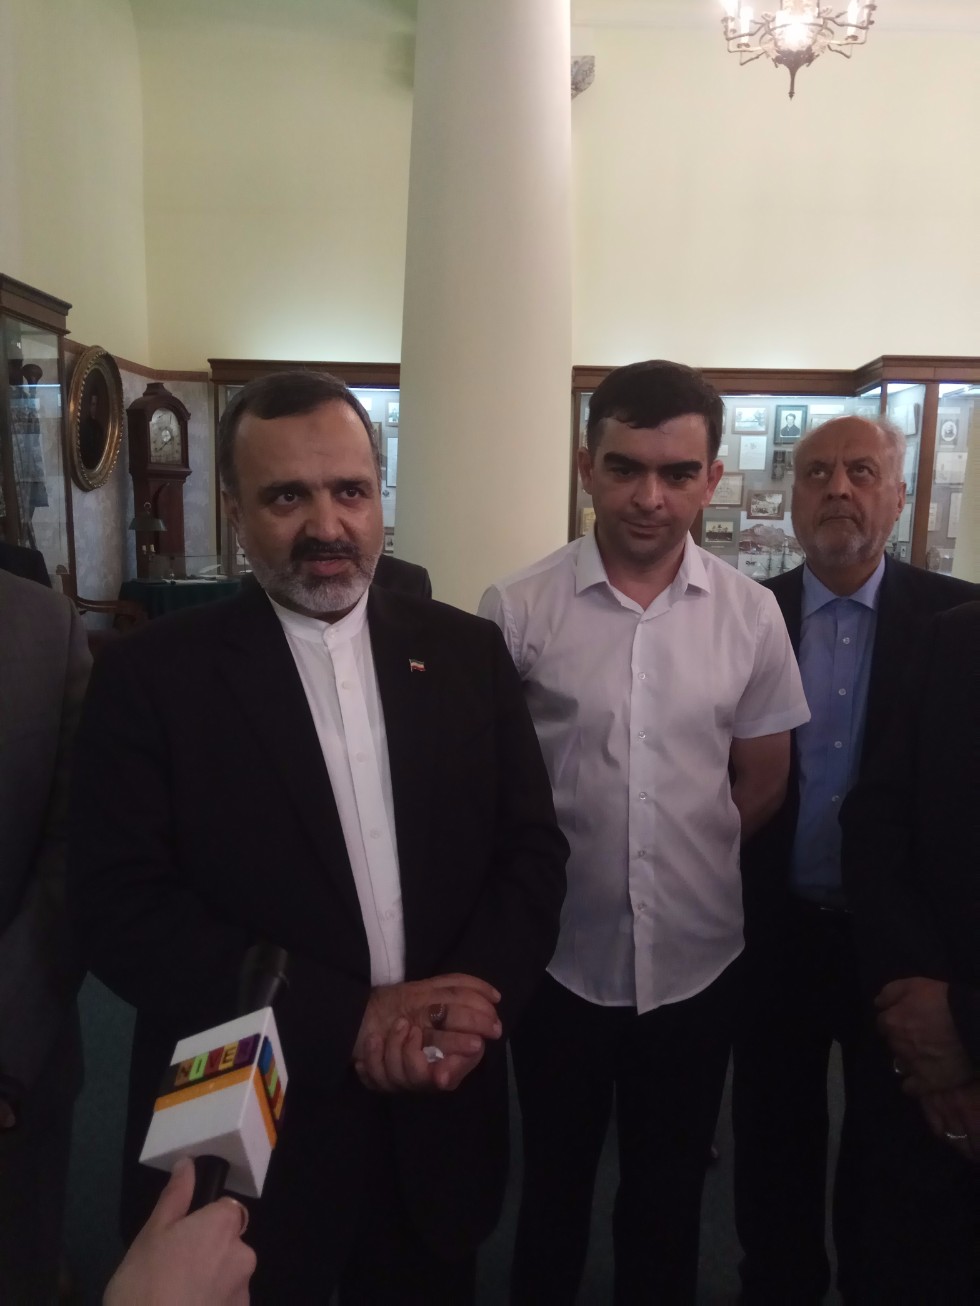 Return Visit by a Delegation of Razavi Khorasan Province